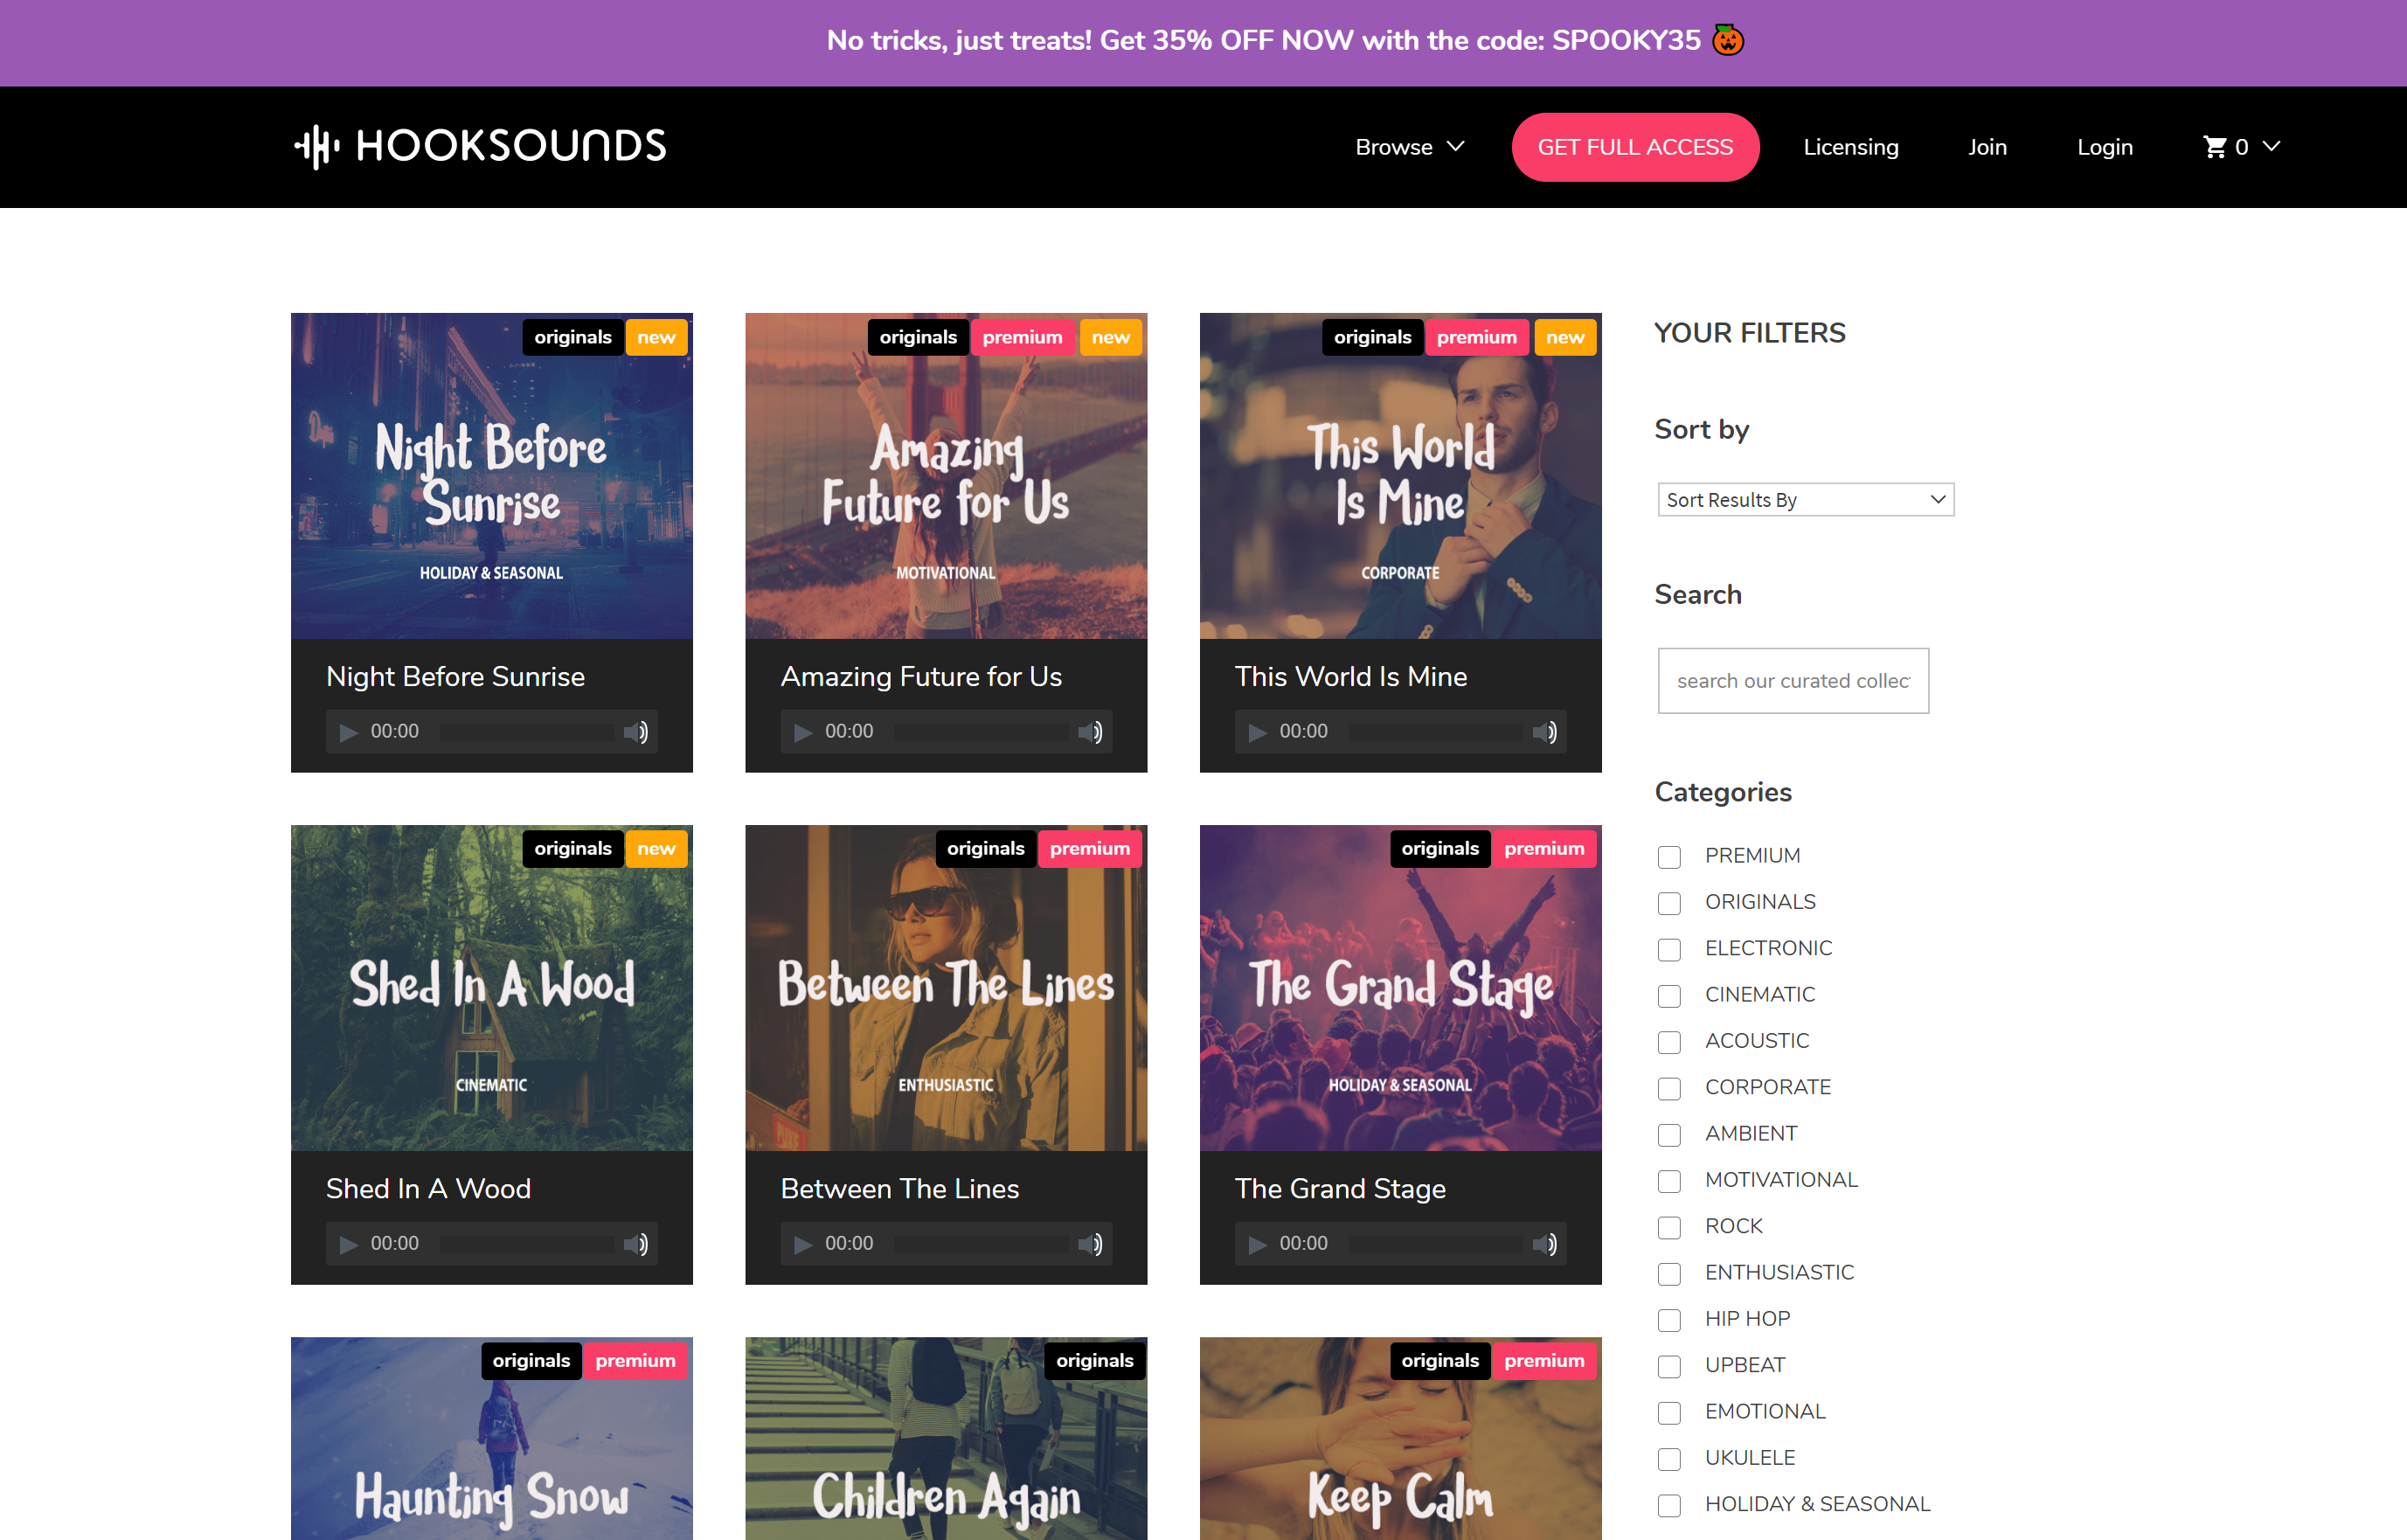 Royalty Free music website Hooksounds